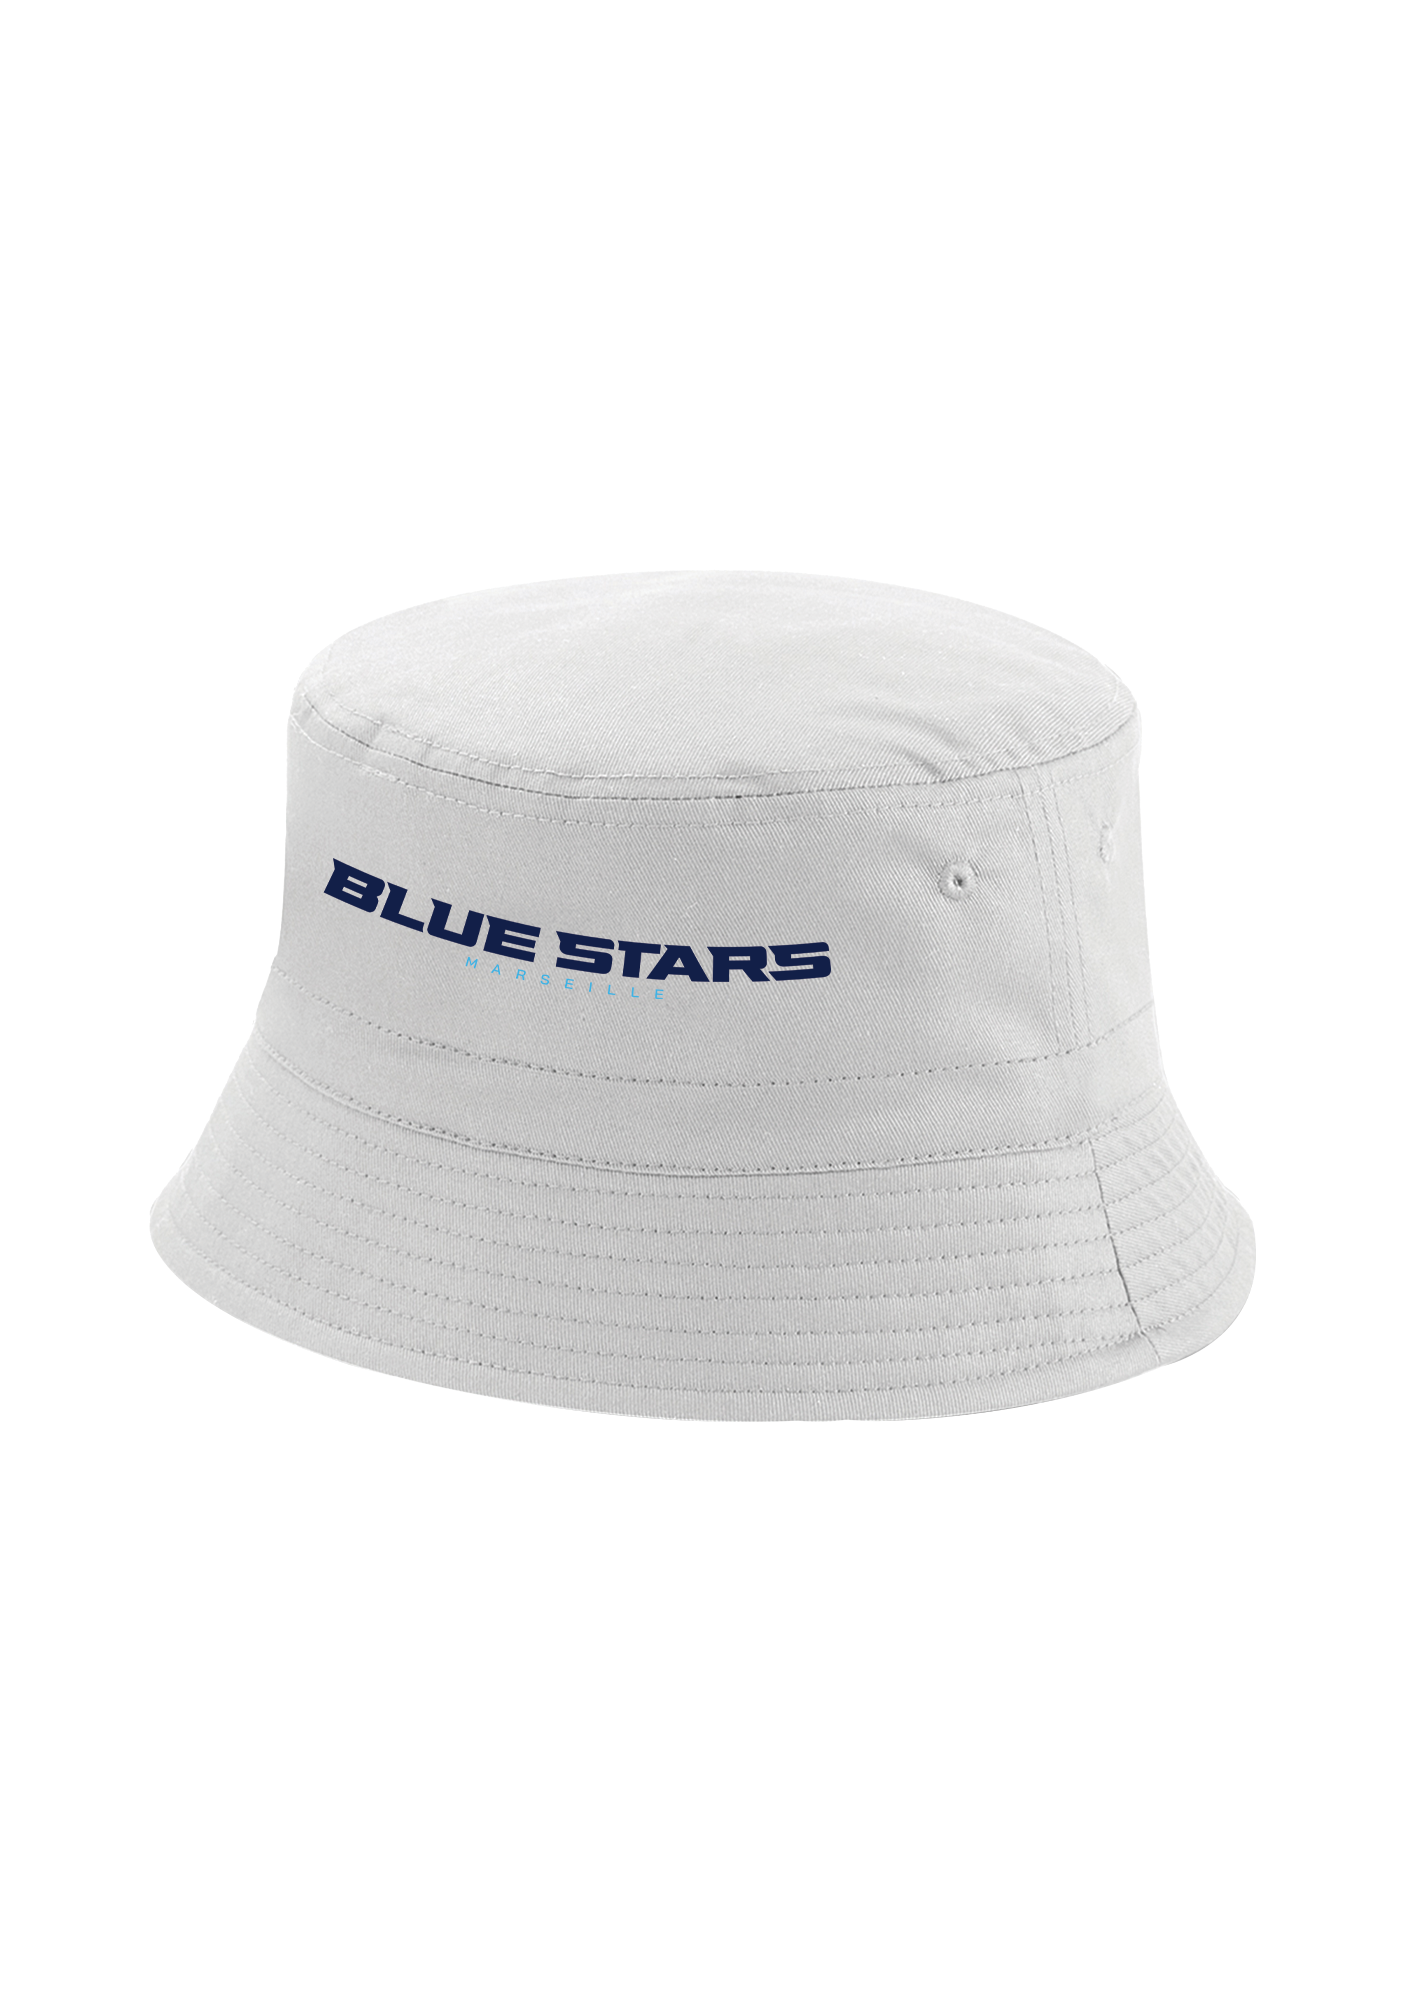 Bob réversible Blue Stars navy / blanc - Copiedebob-bleu-reversible-blanc